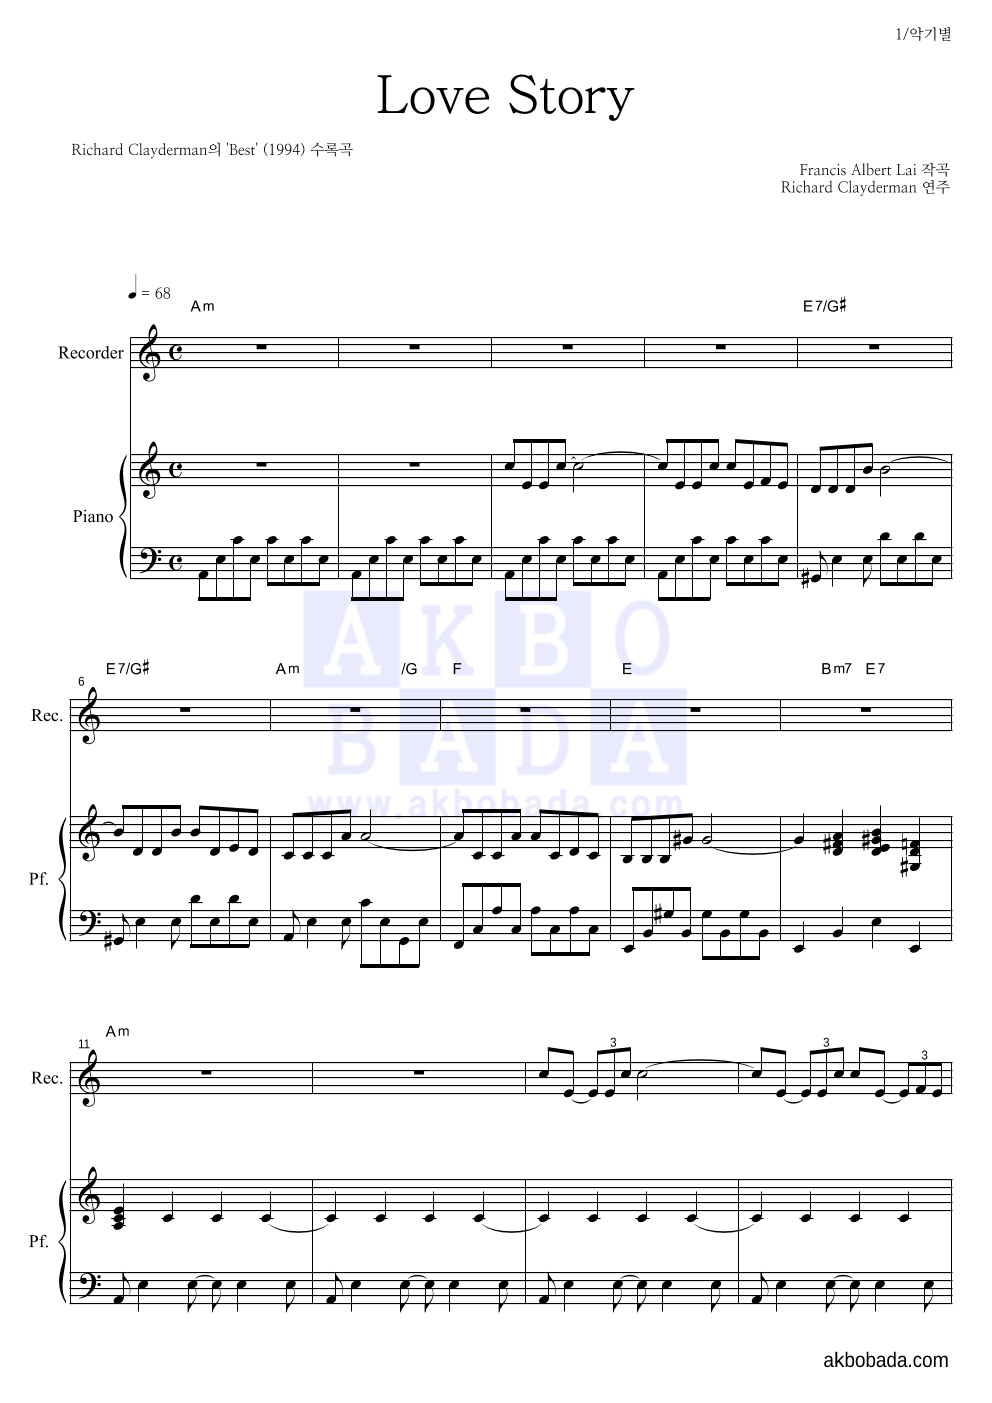 Richard Clayderman  - Love Story 리코더&피아노 악보 